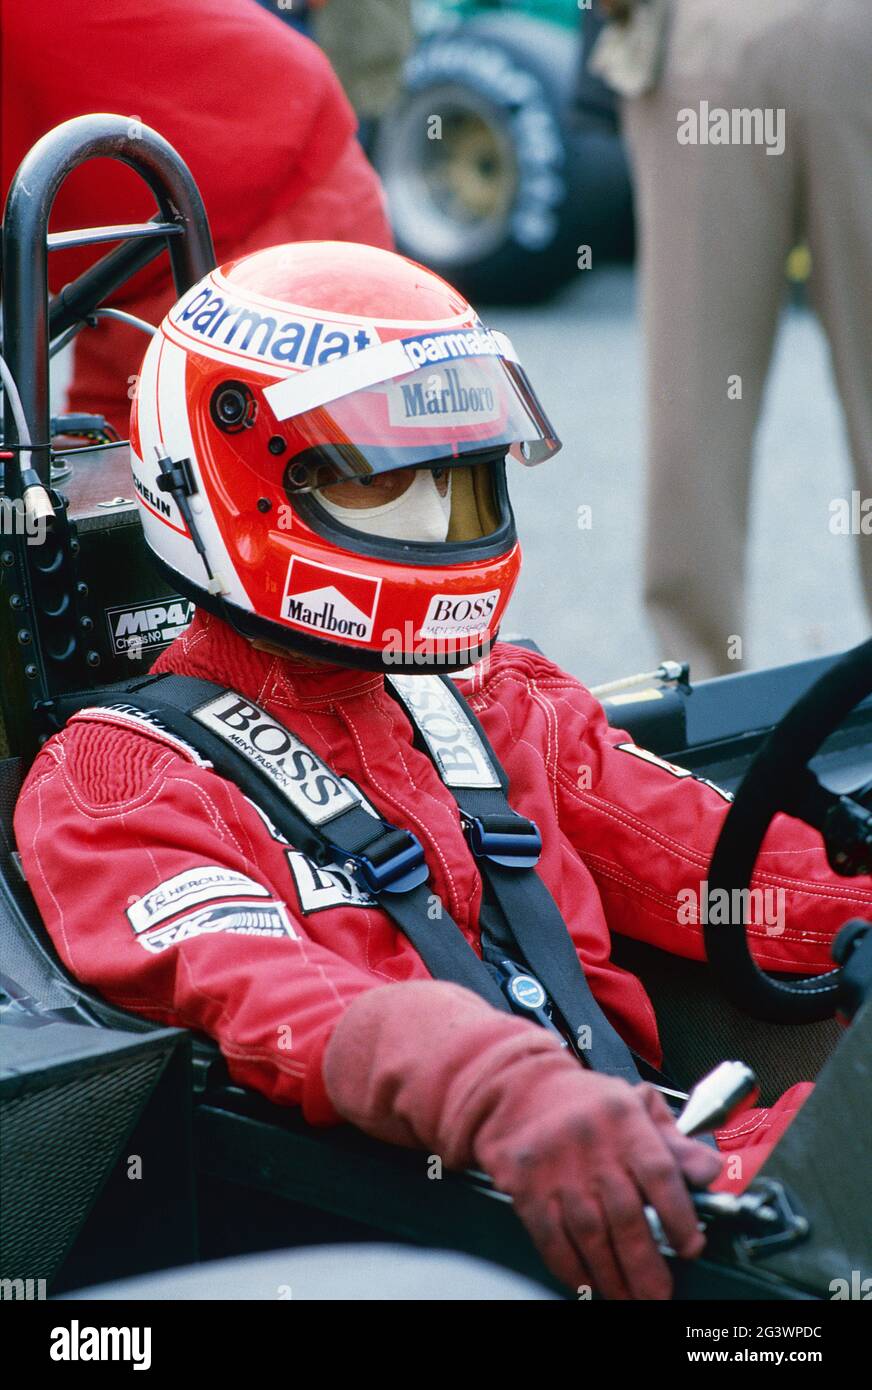 Niki Lauda Mclaren High Resolution Stock Photography and Images - Alamy